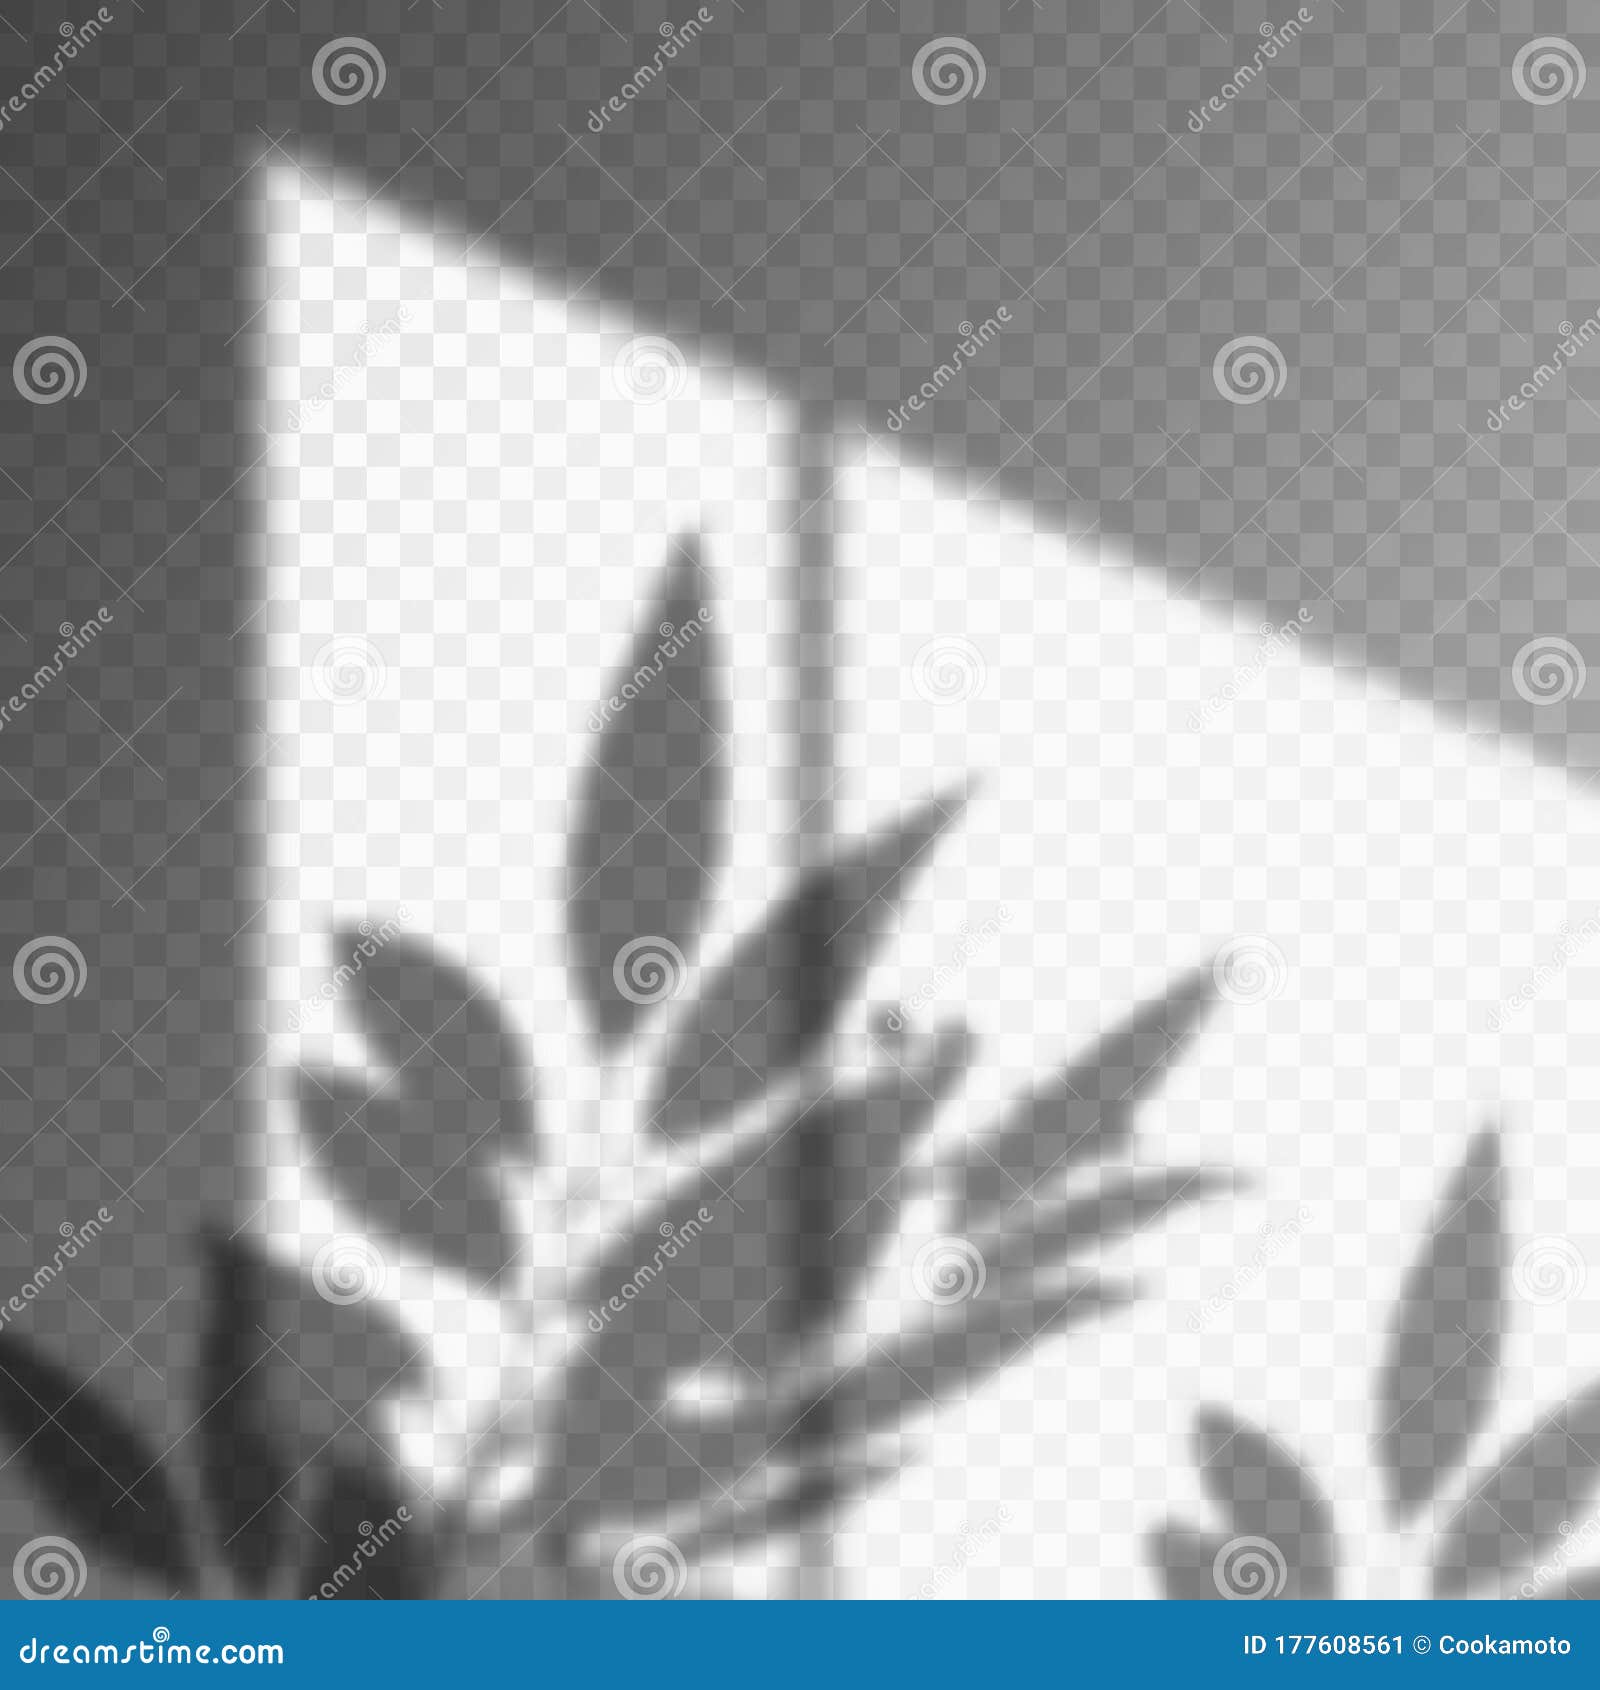 leaf or plant shadow on transparent background